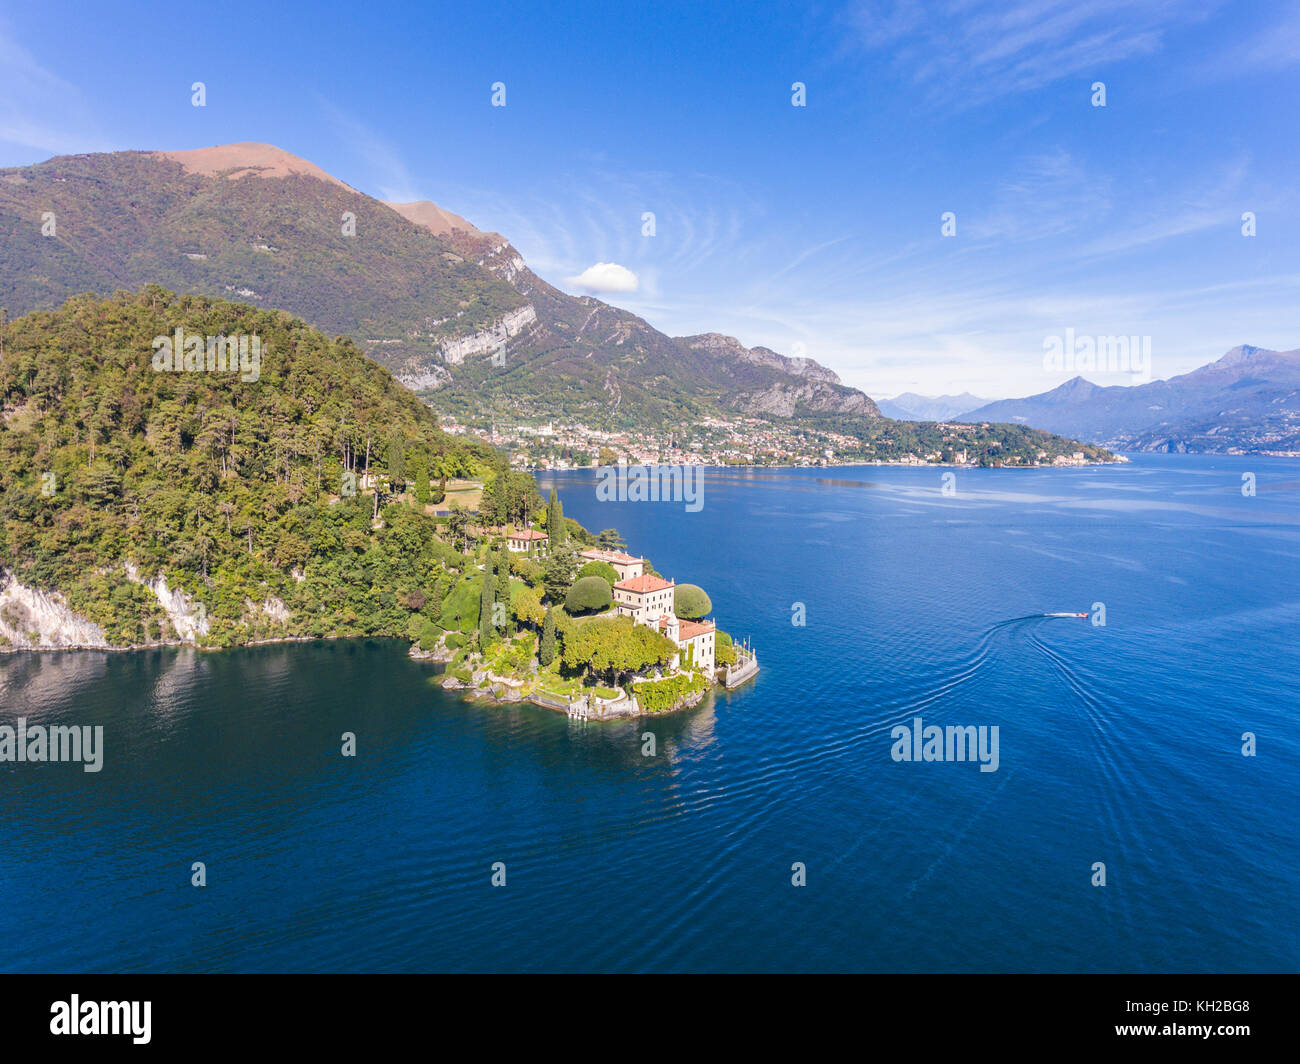 Villa Balbianello, lake of Como in Italy Stock Photo